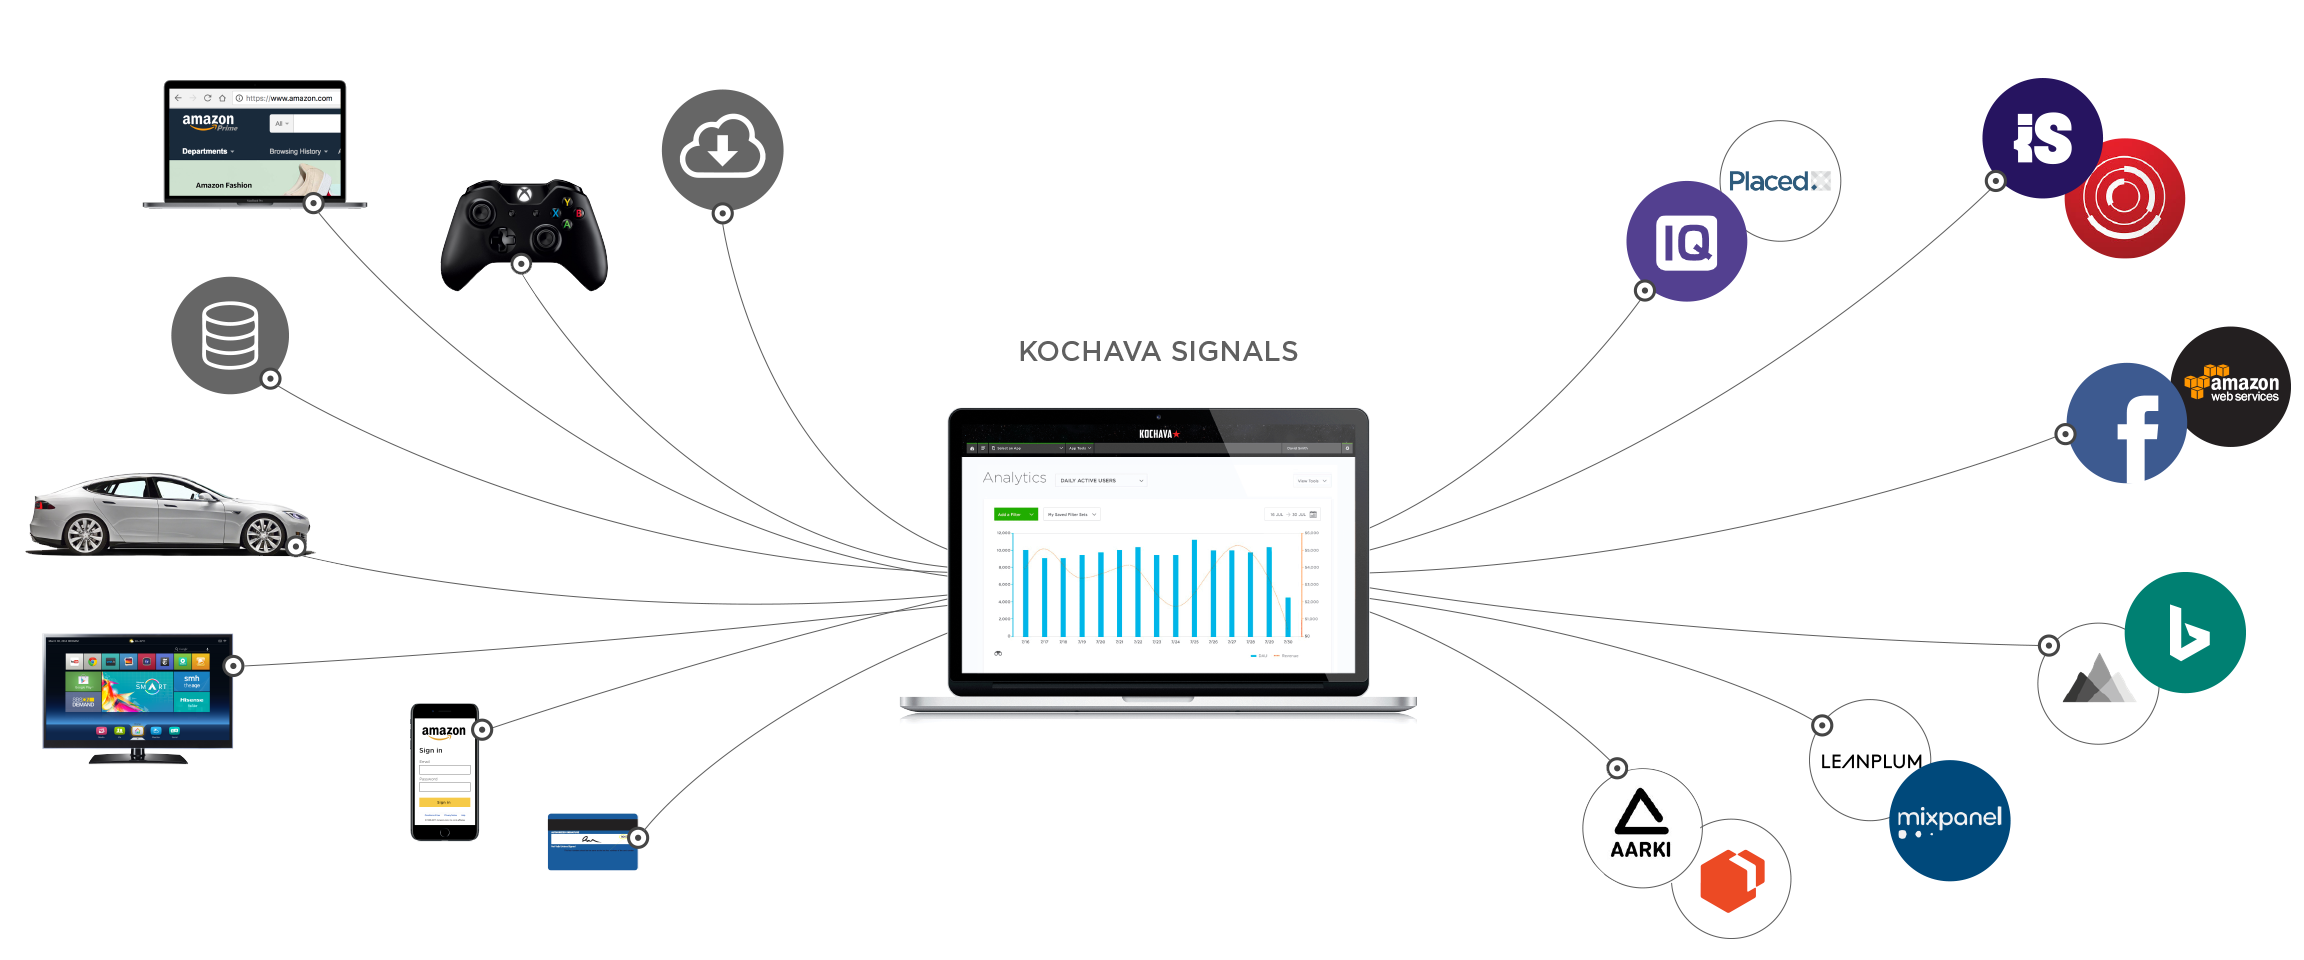 Measuring Kochava Signals with the Kochava Analytics Dashboard